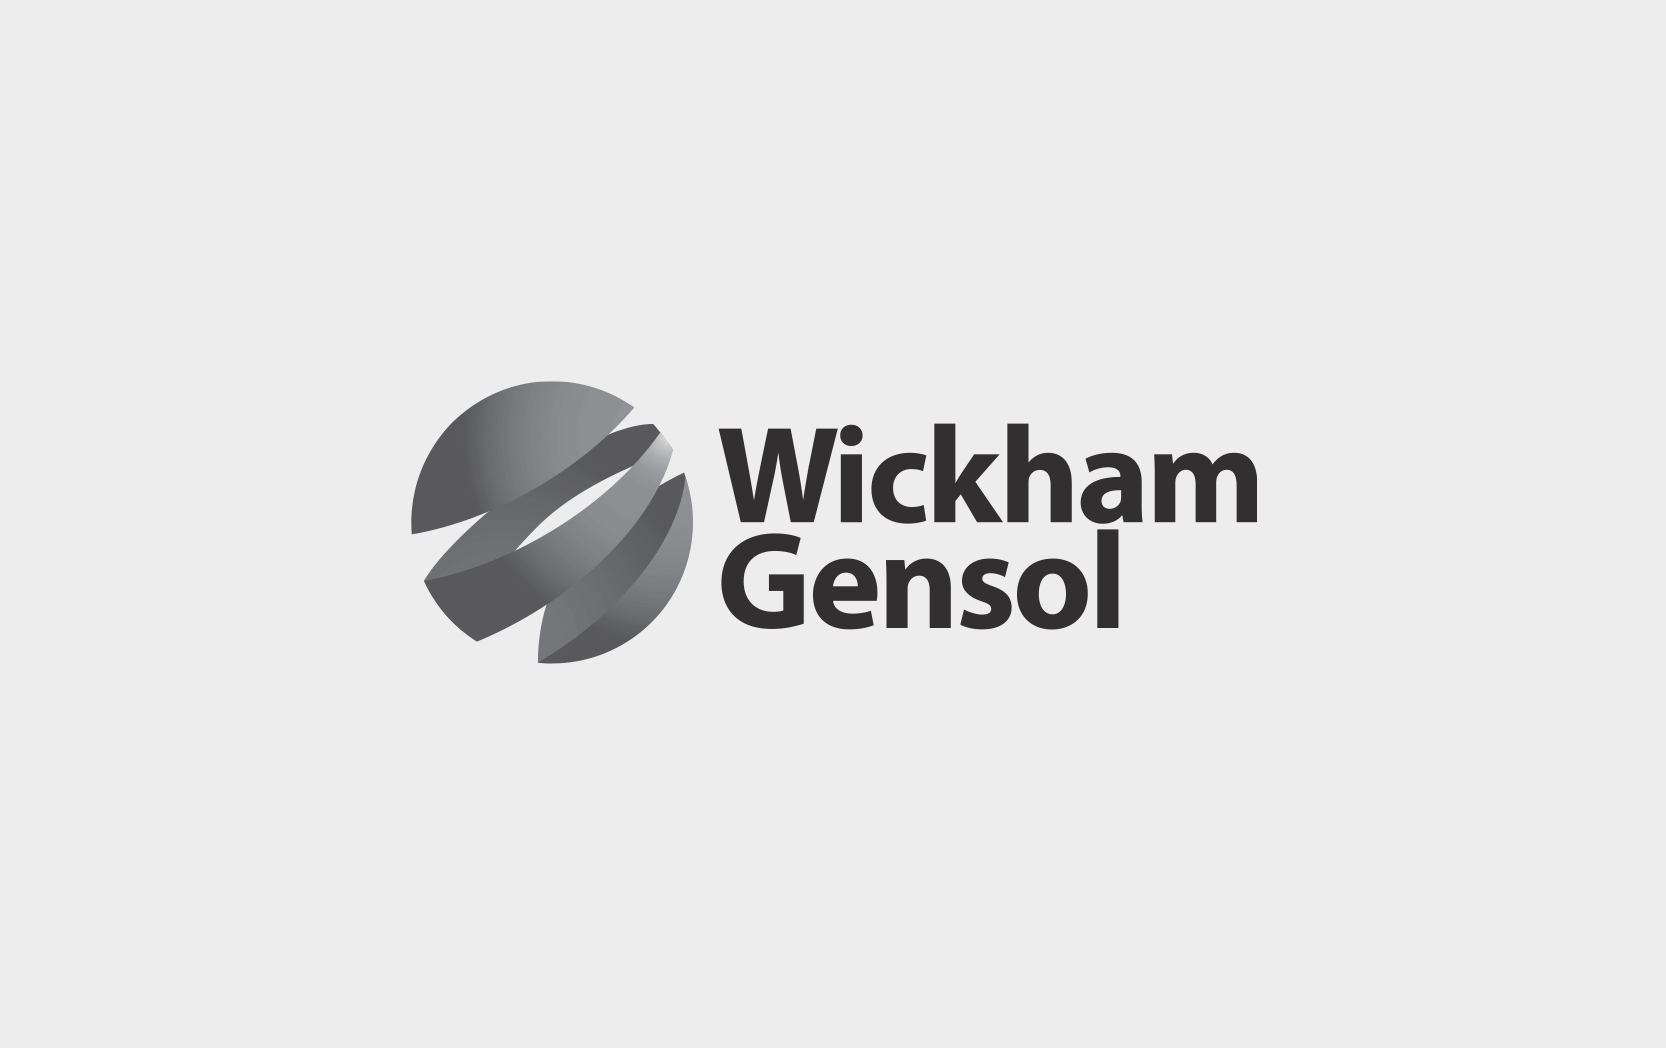 Wickham Gensol